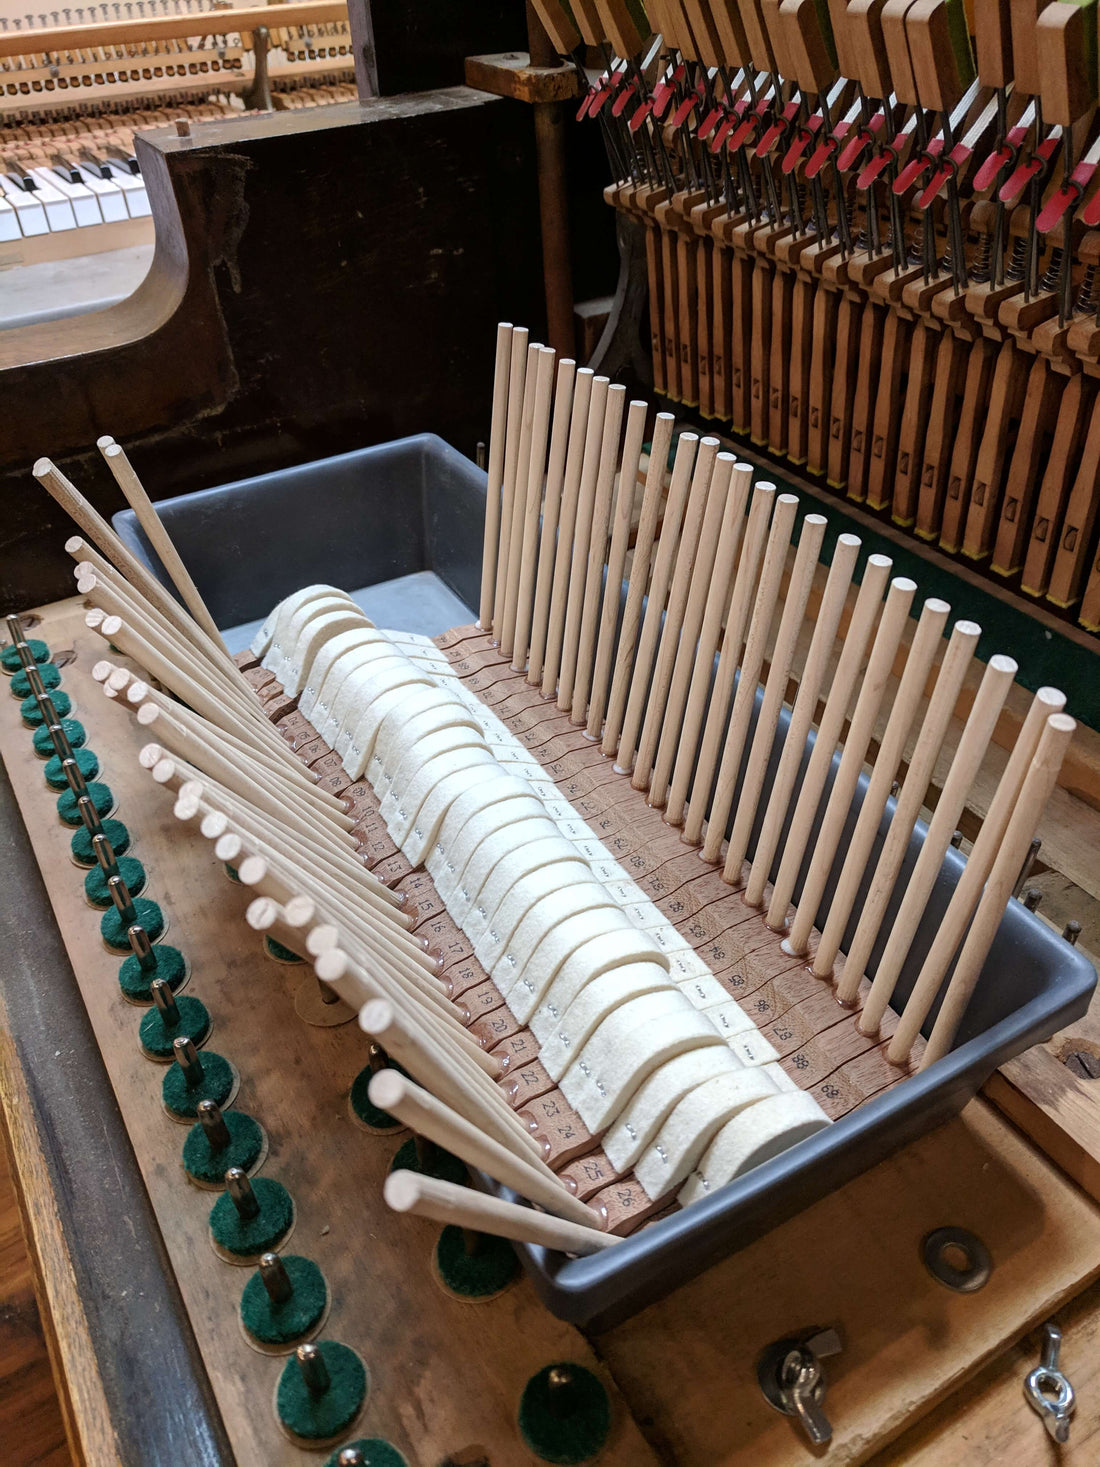 Piano Lessons Blog - A Basket of Lollipops